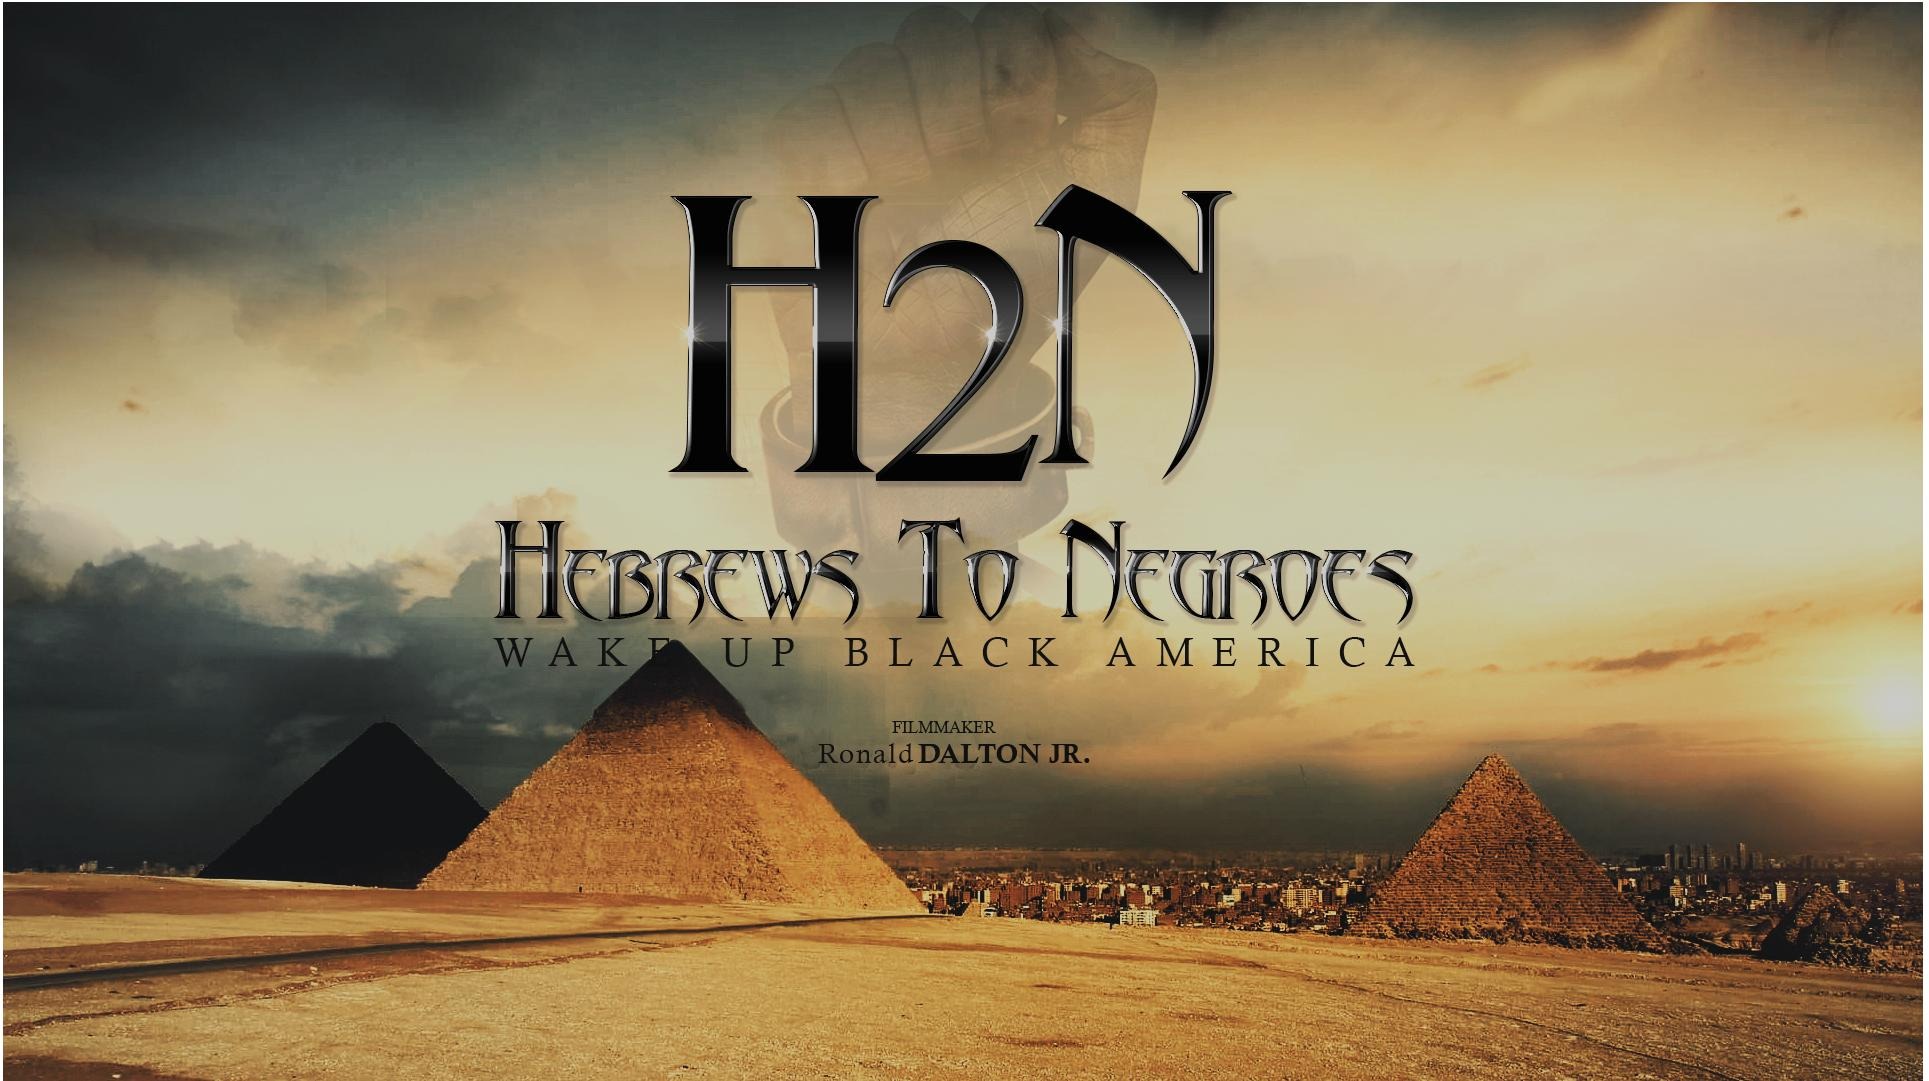 How To Watch Hebrews To Negro Film